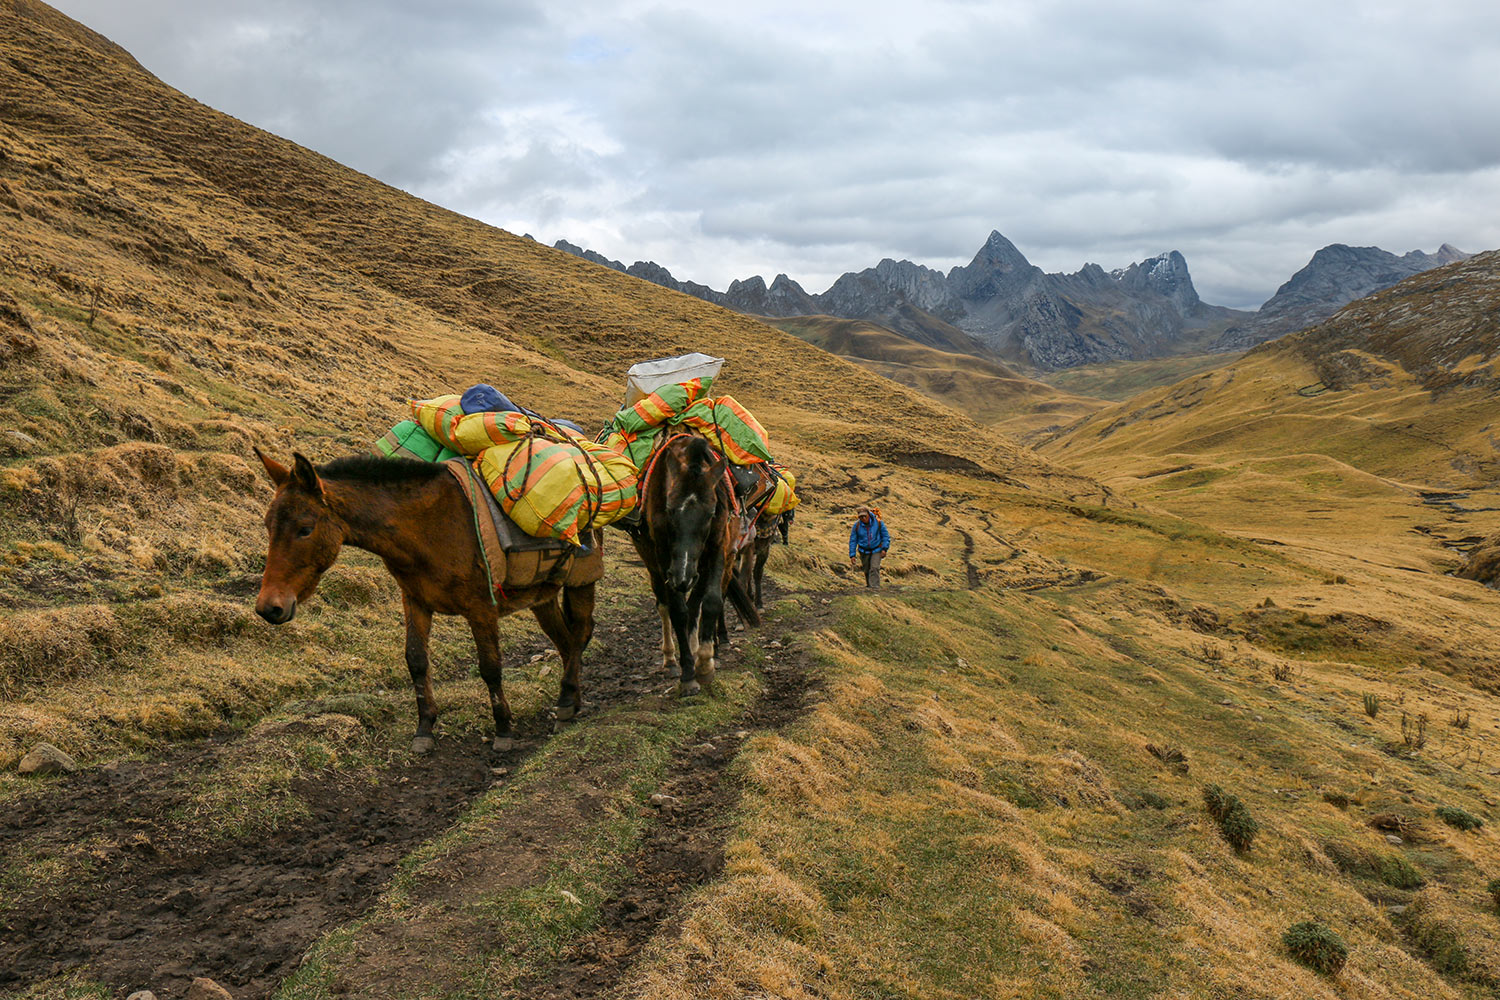 Mulet, Cordillera Huayhuash, Pérou / Mule, Cordillera Huayhuash, Peru